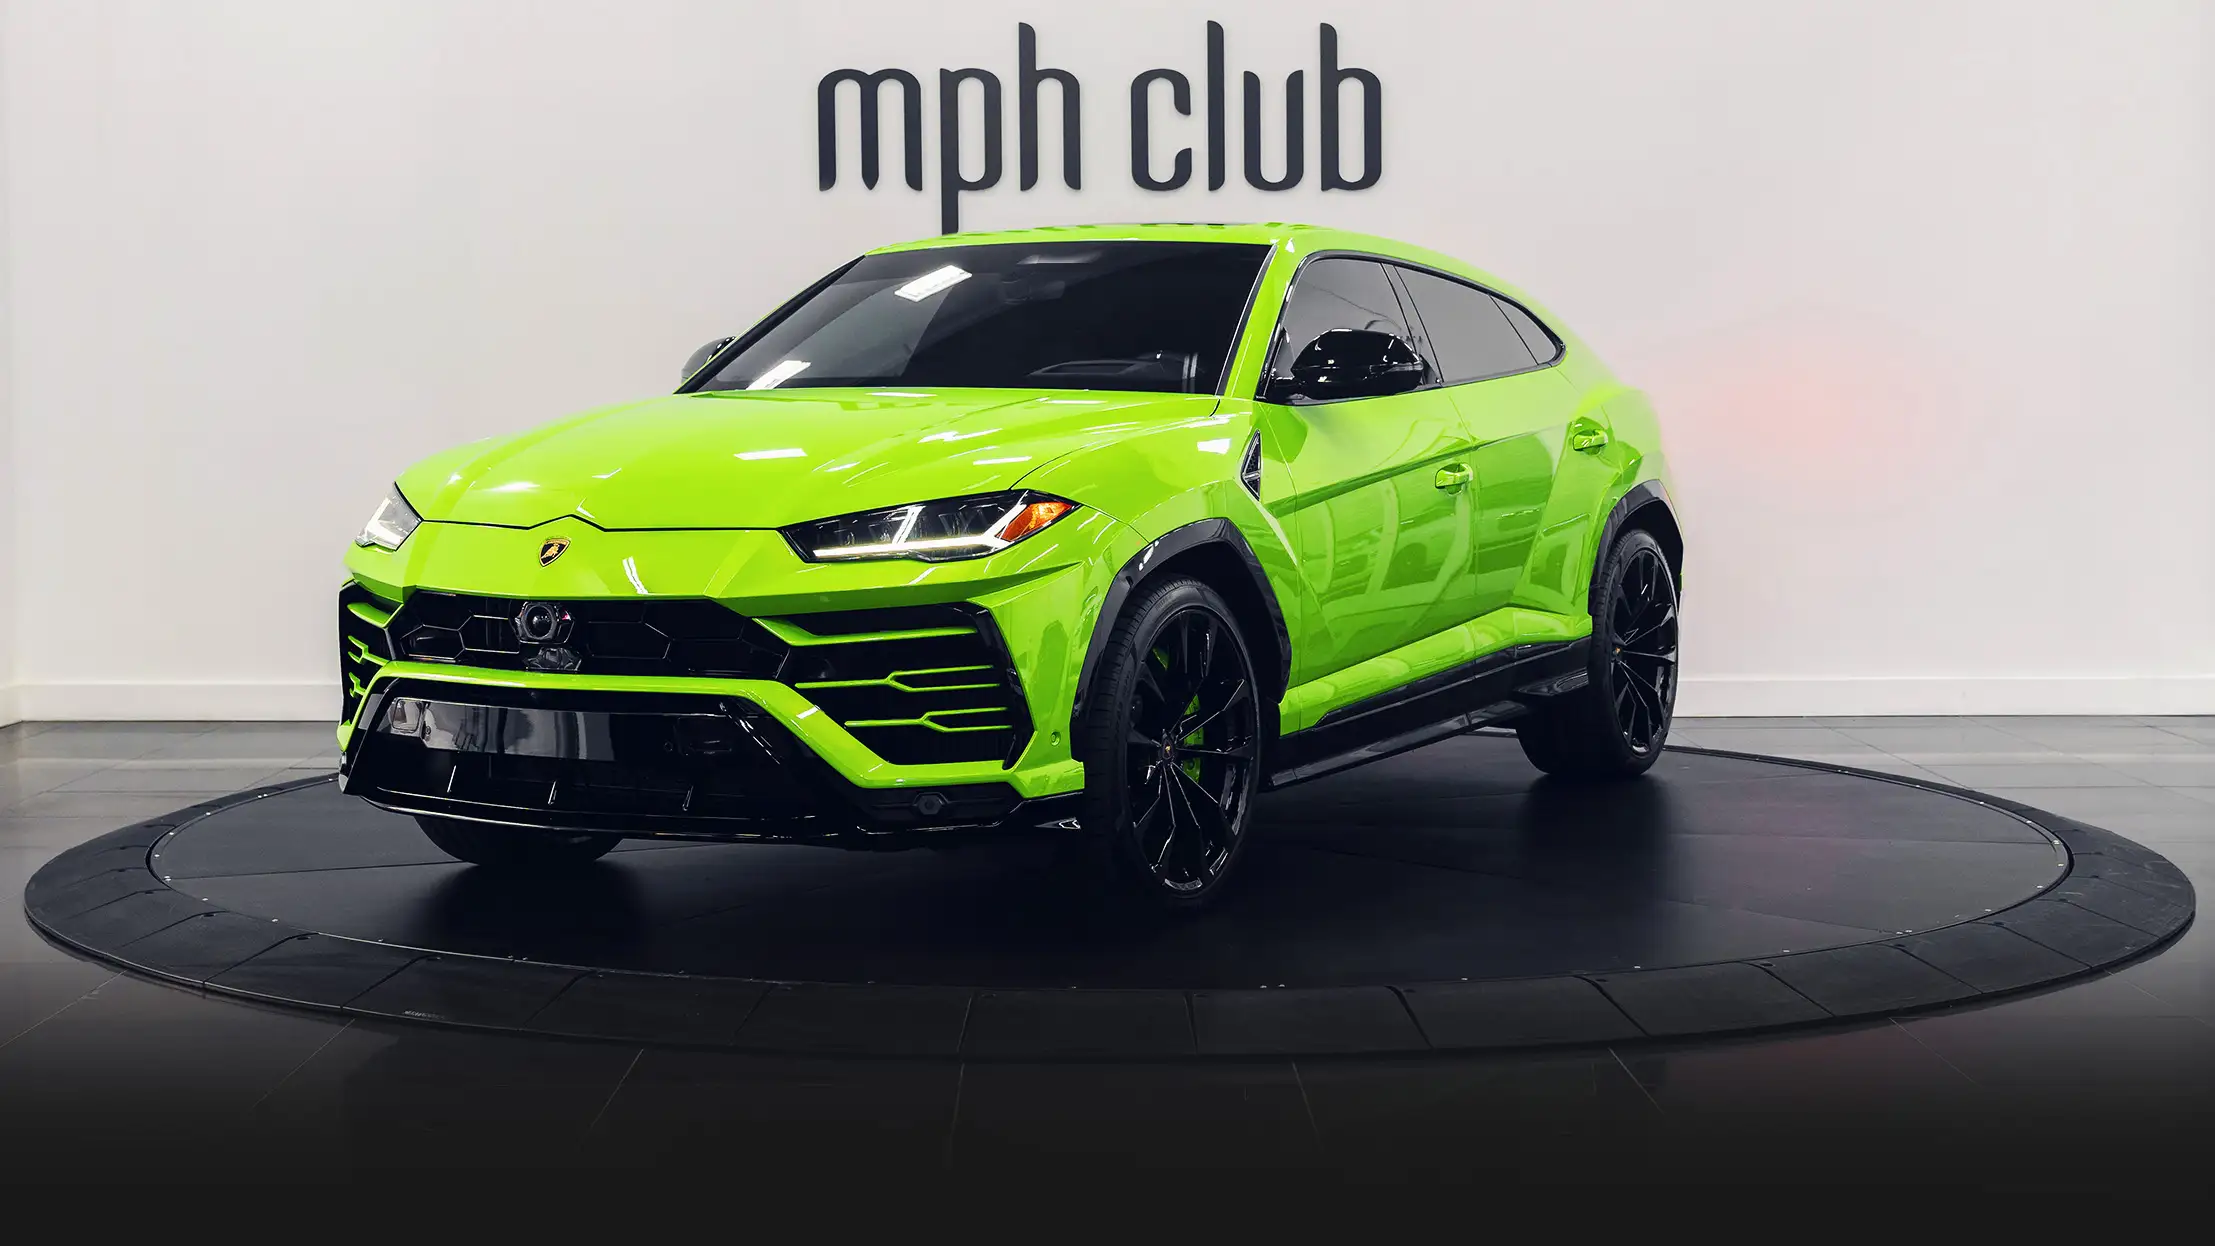 Green Lamborghini Urus rental profile view mph club